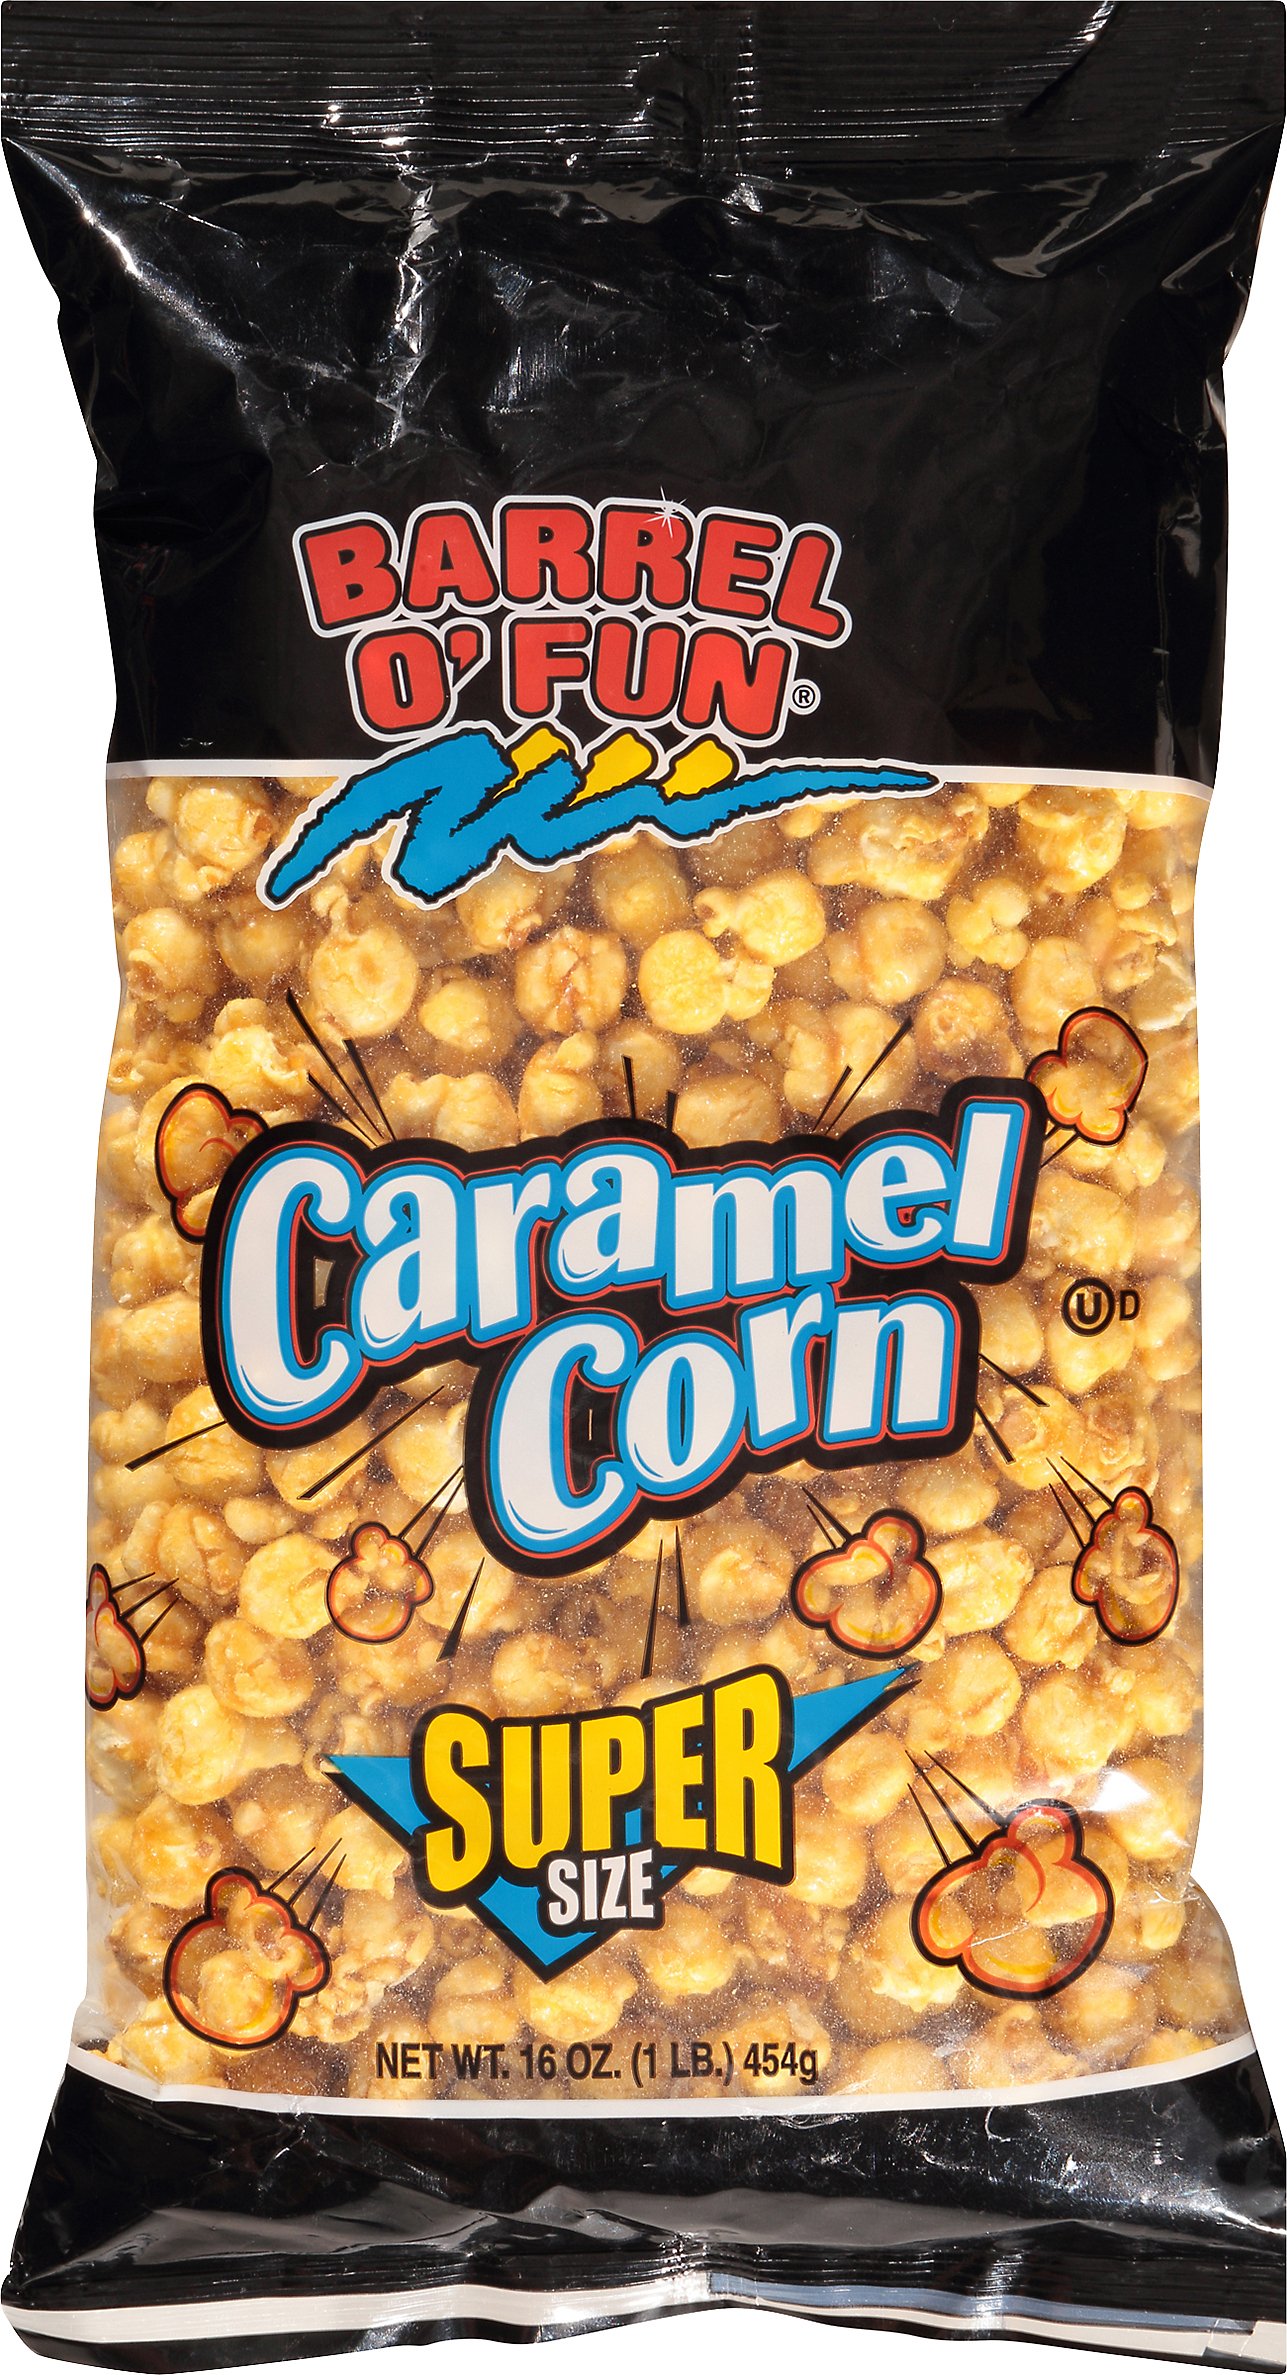 Barrel O' Fun Caramel Corn Super Size, 18 Oz. - image 2 of 4